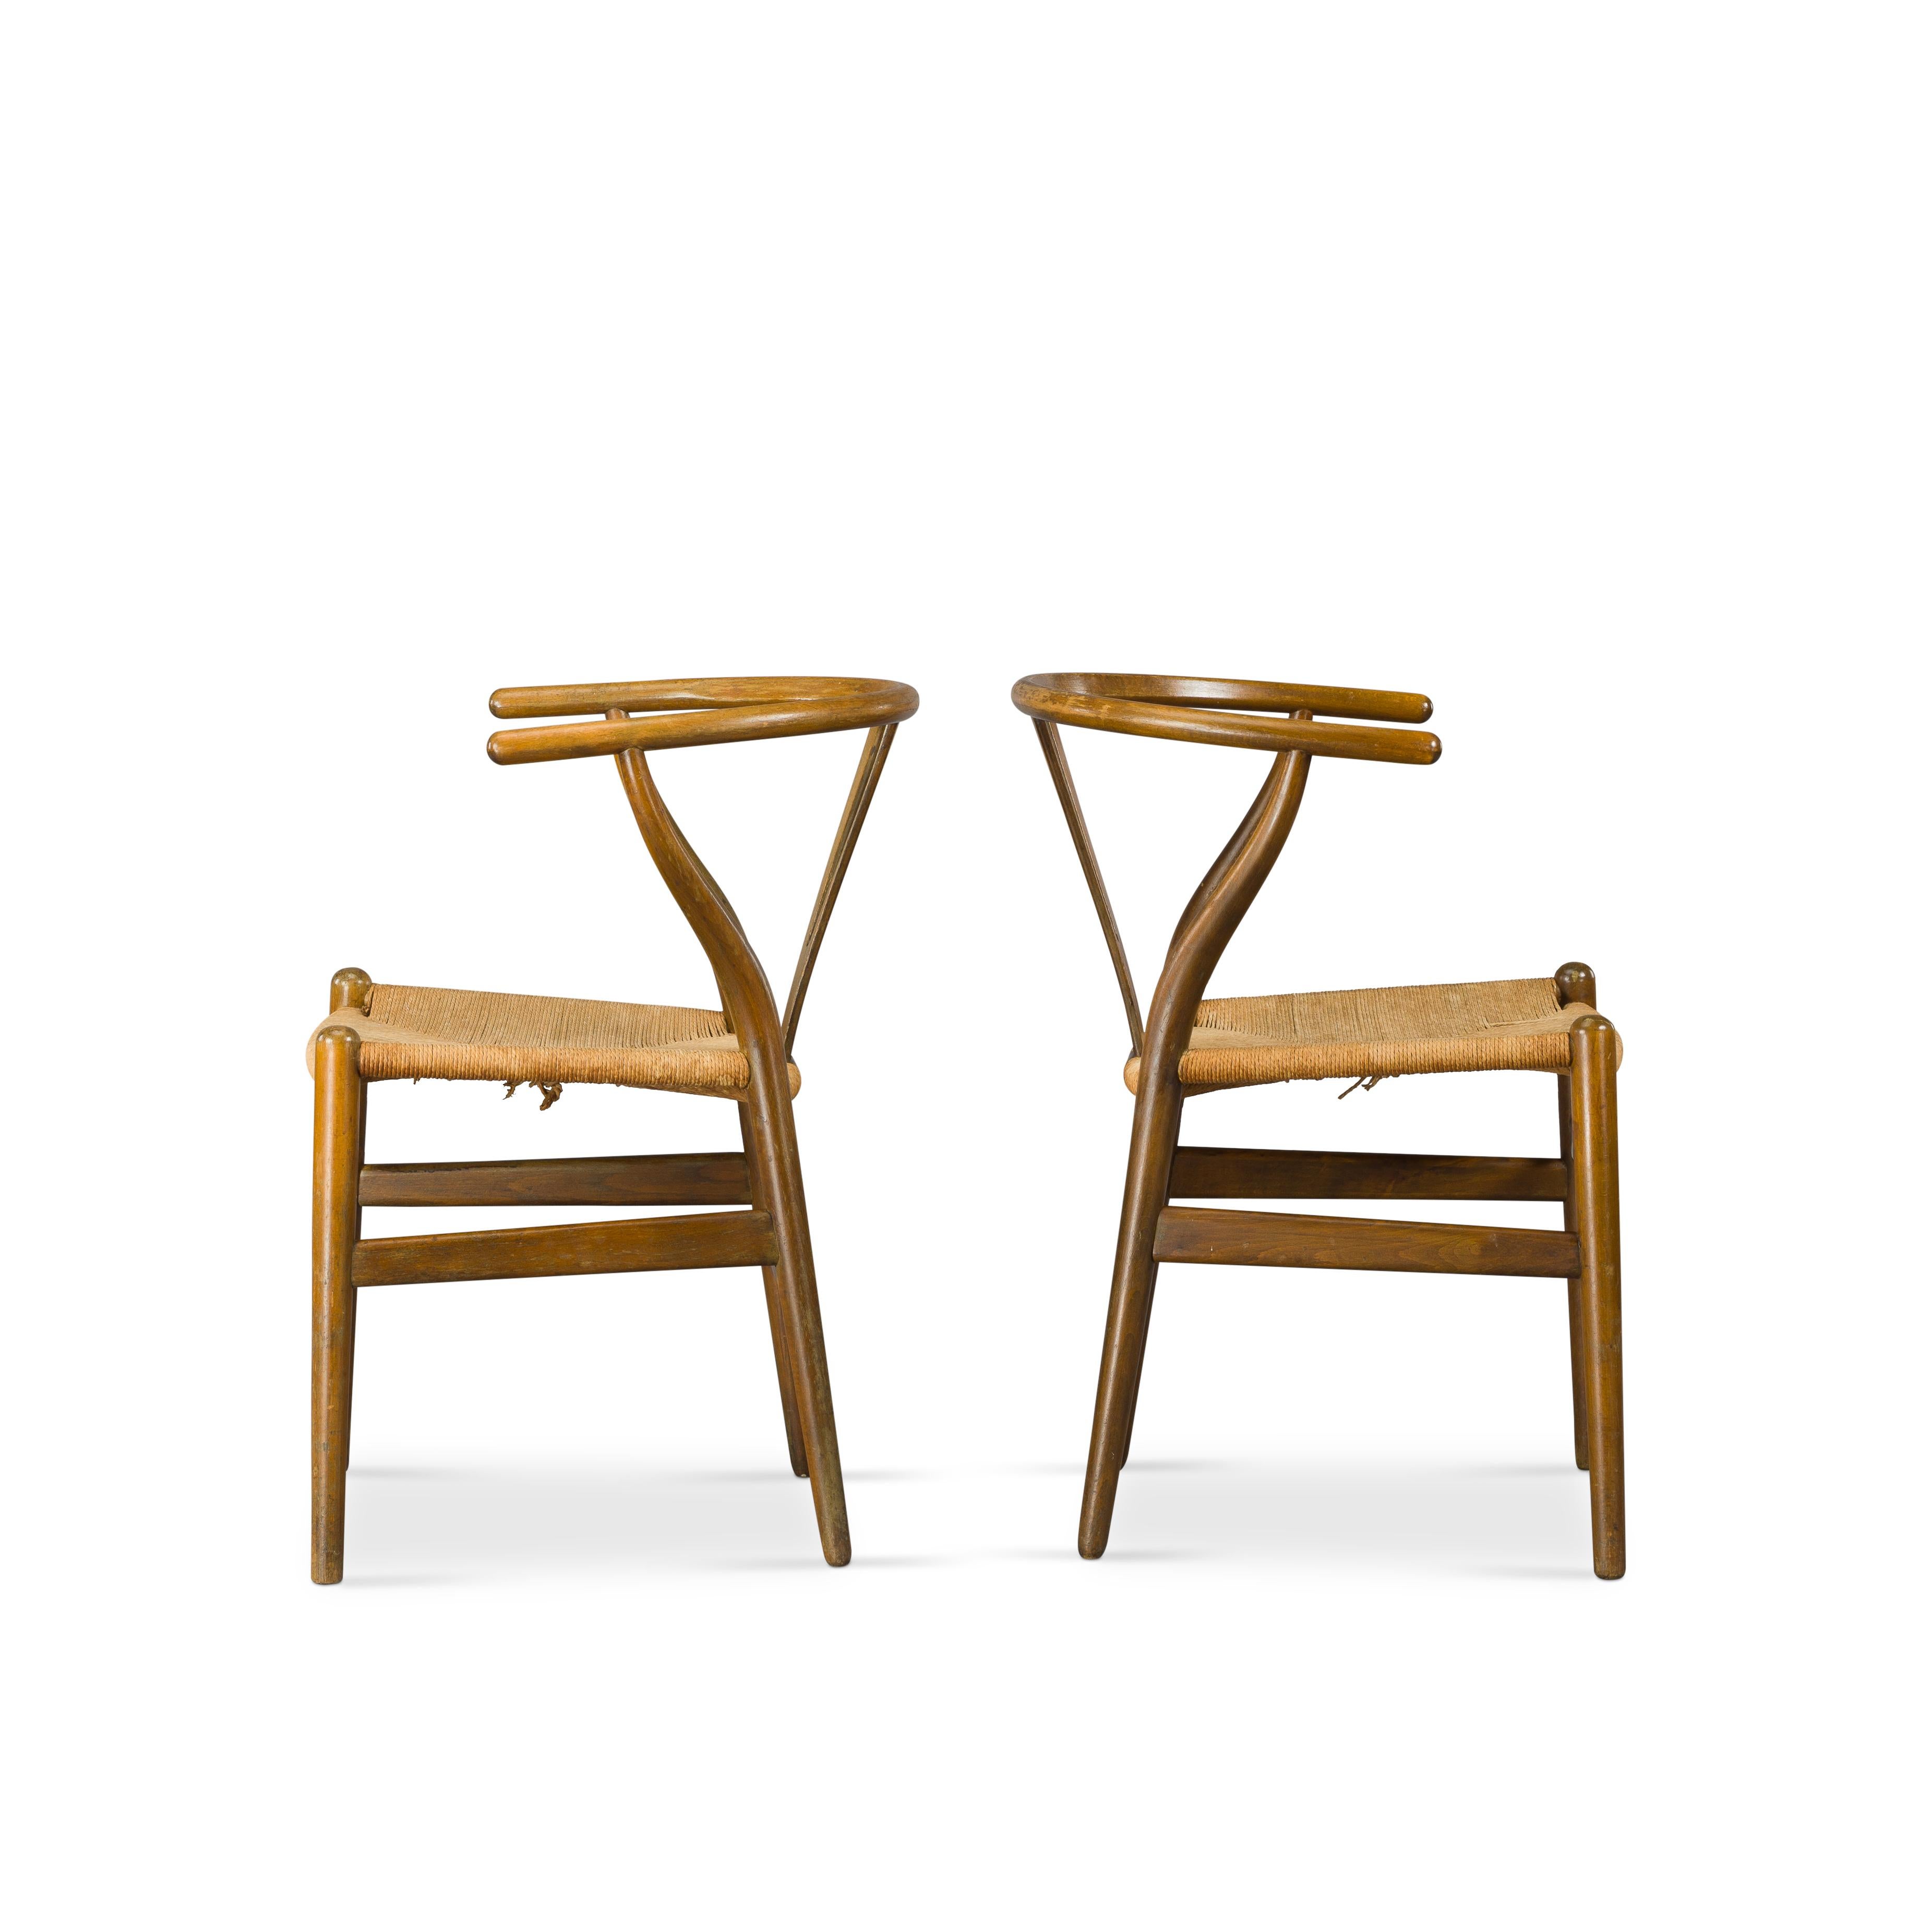 Danish Midcentury CH24 Wishbone Chairs by Hans J. Wegner for Carl Hansen & Søn Made in